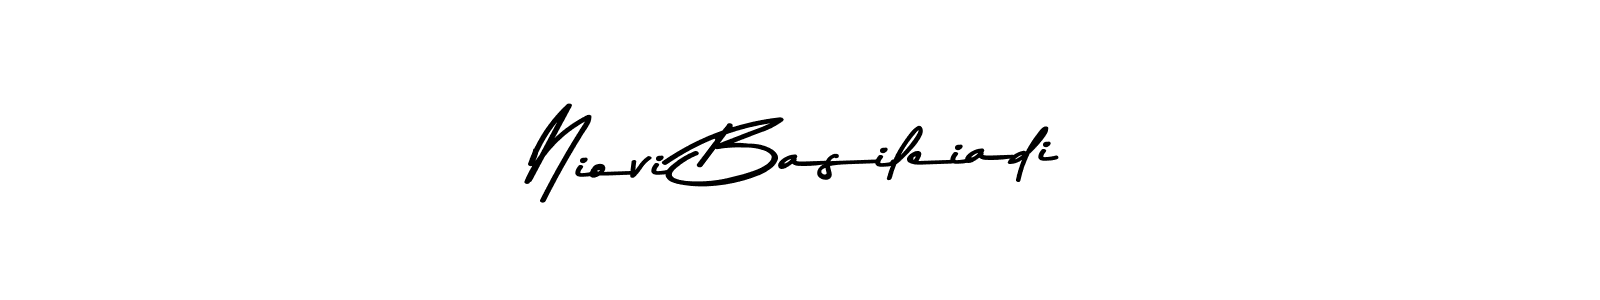 How to Draw Niovi Basileiadi signature style? Asem Kandis PERSONAL USE is a latest design signature styles for name Niovi Basileiadi. Niovi Basileiadi signature style 9 images and pictures png